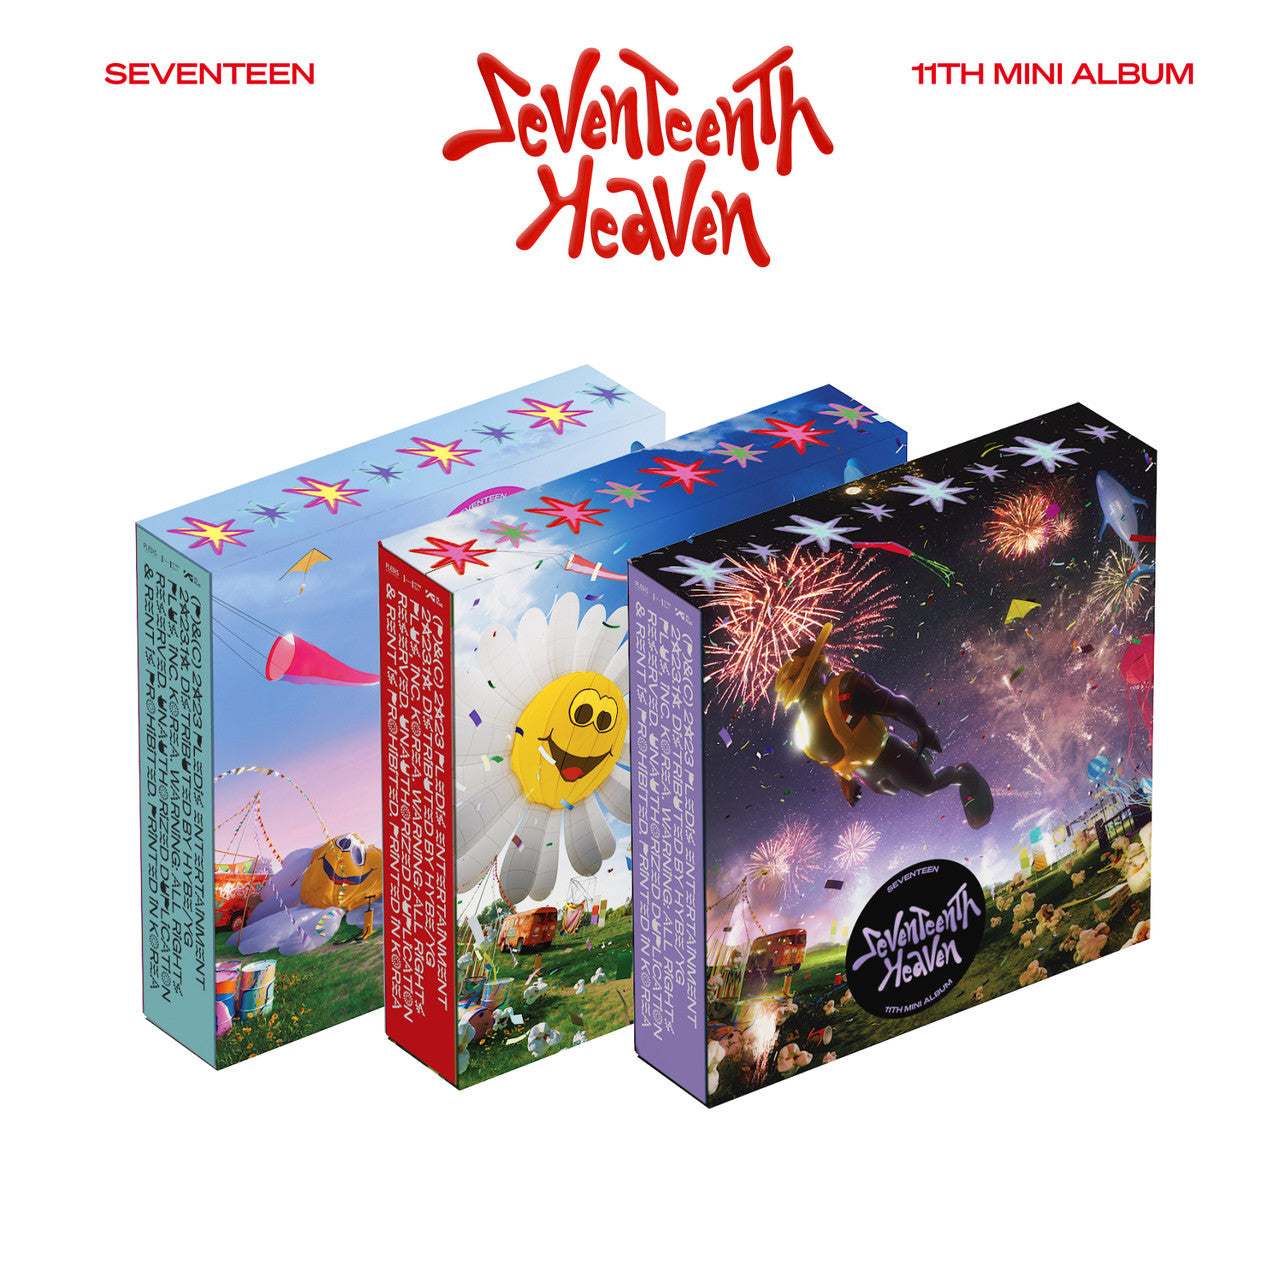 SEVENTEEN 11th Mini Album SEVENTEENTH HEAVEN + Weverse Gift